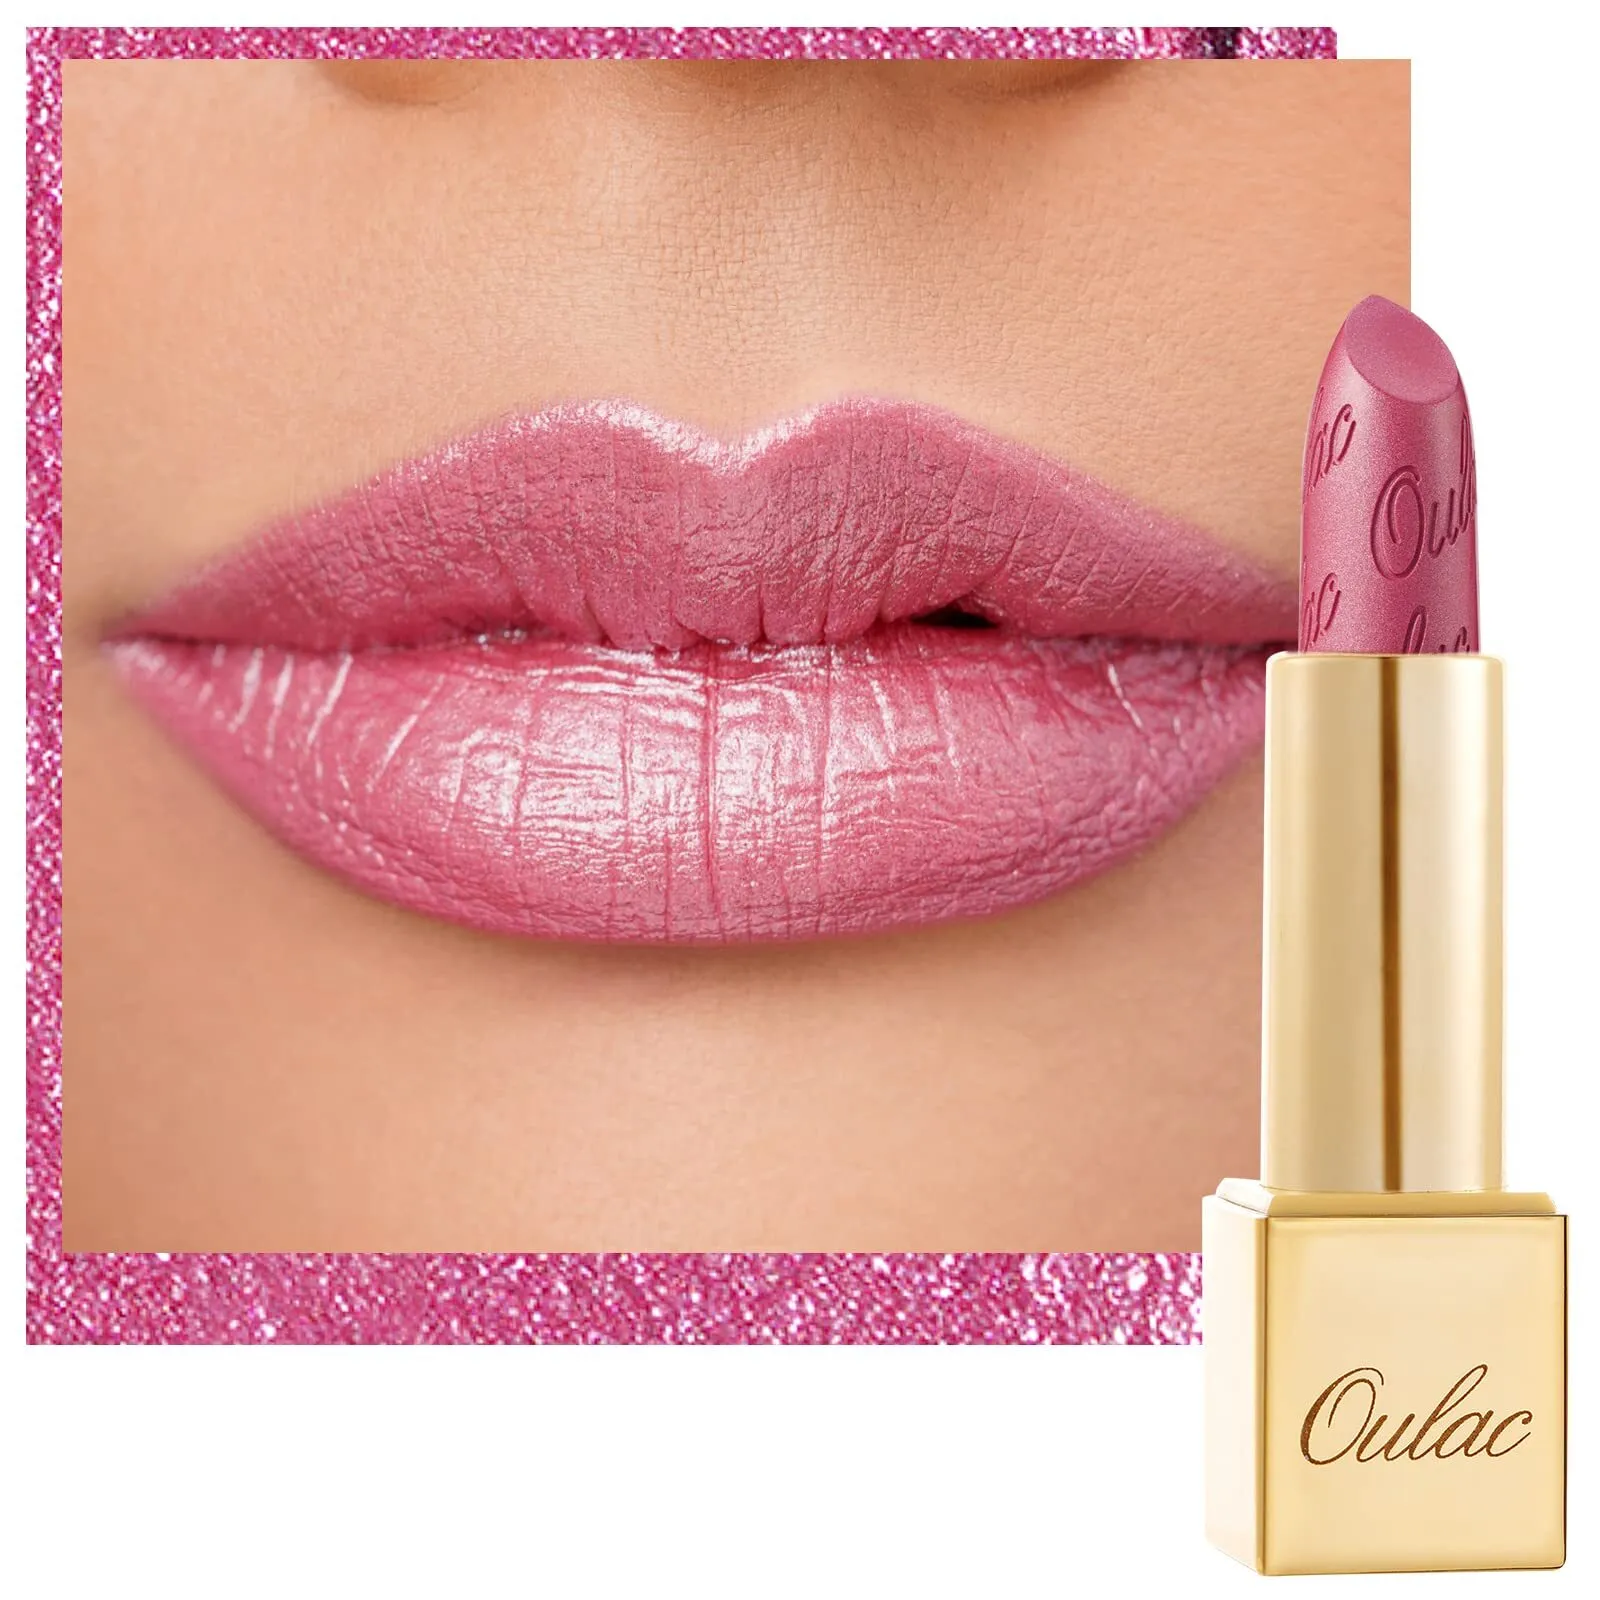 Metallic Pink Lipstick for Women High Impact Lipcolor Moisturizing Cream... - $25.00